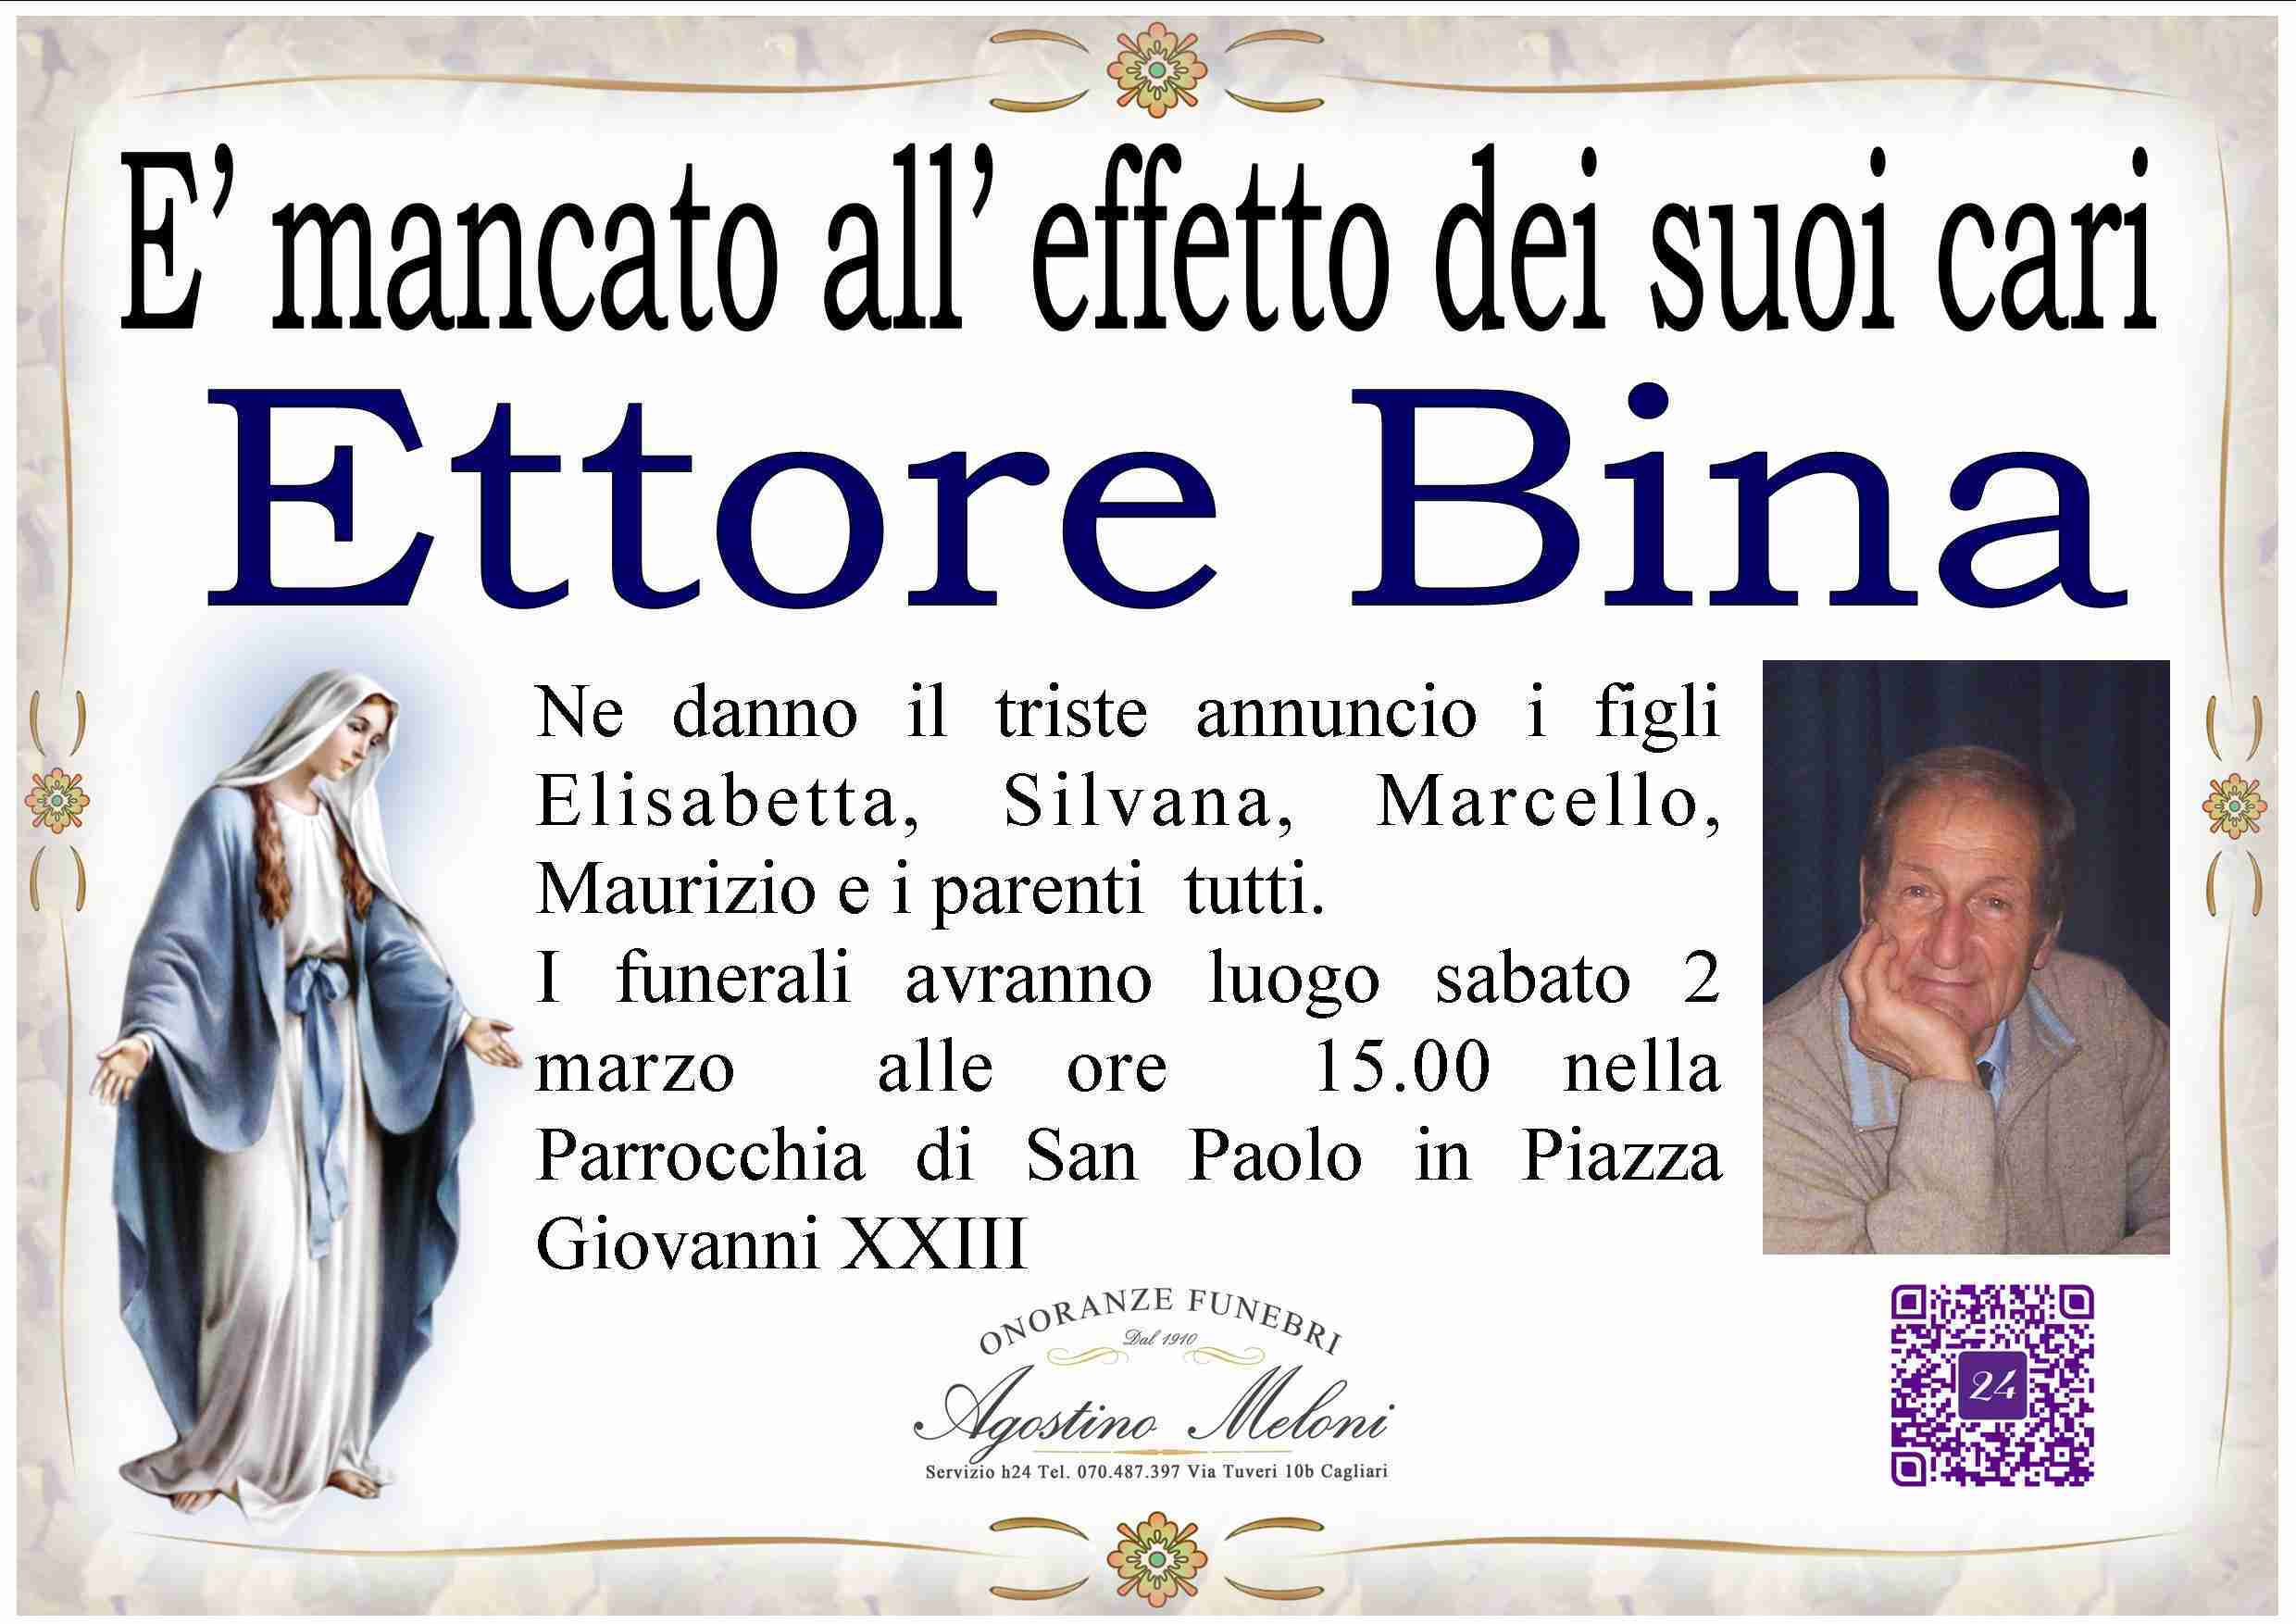 Ettore Bina